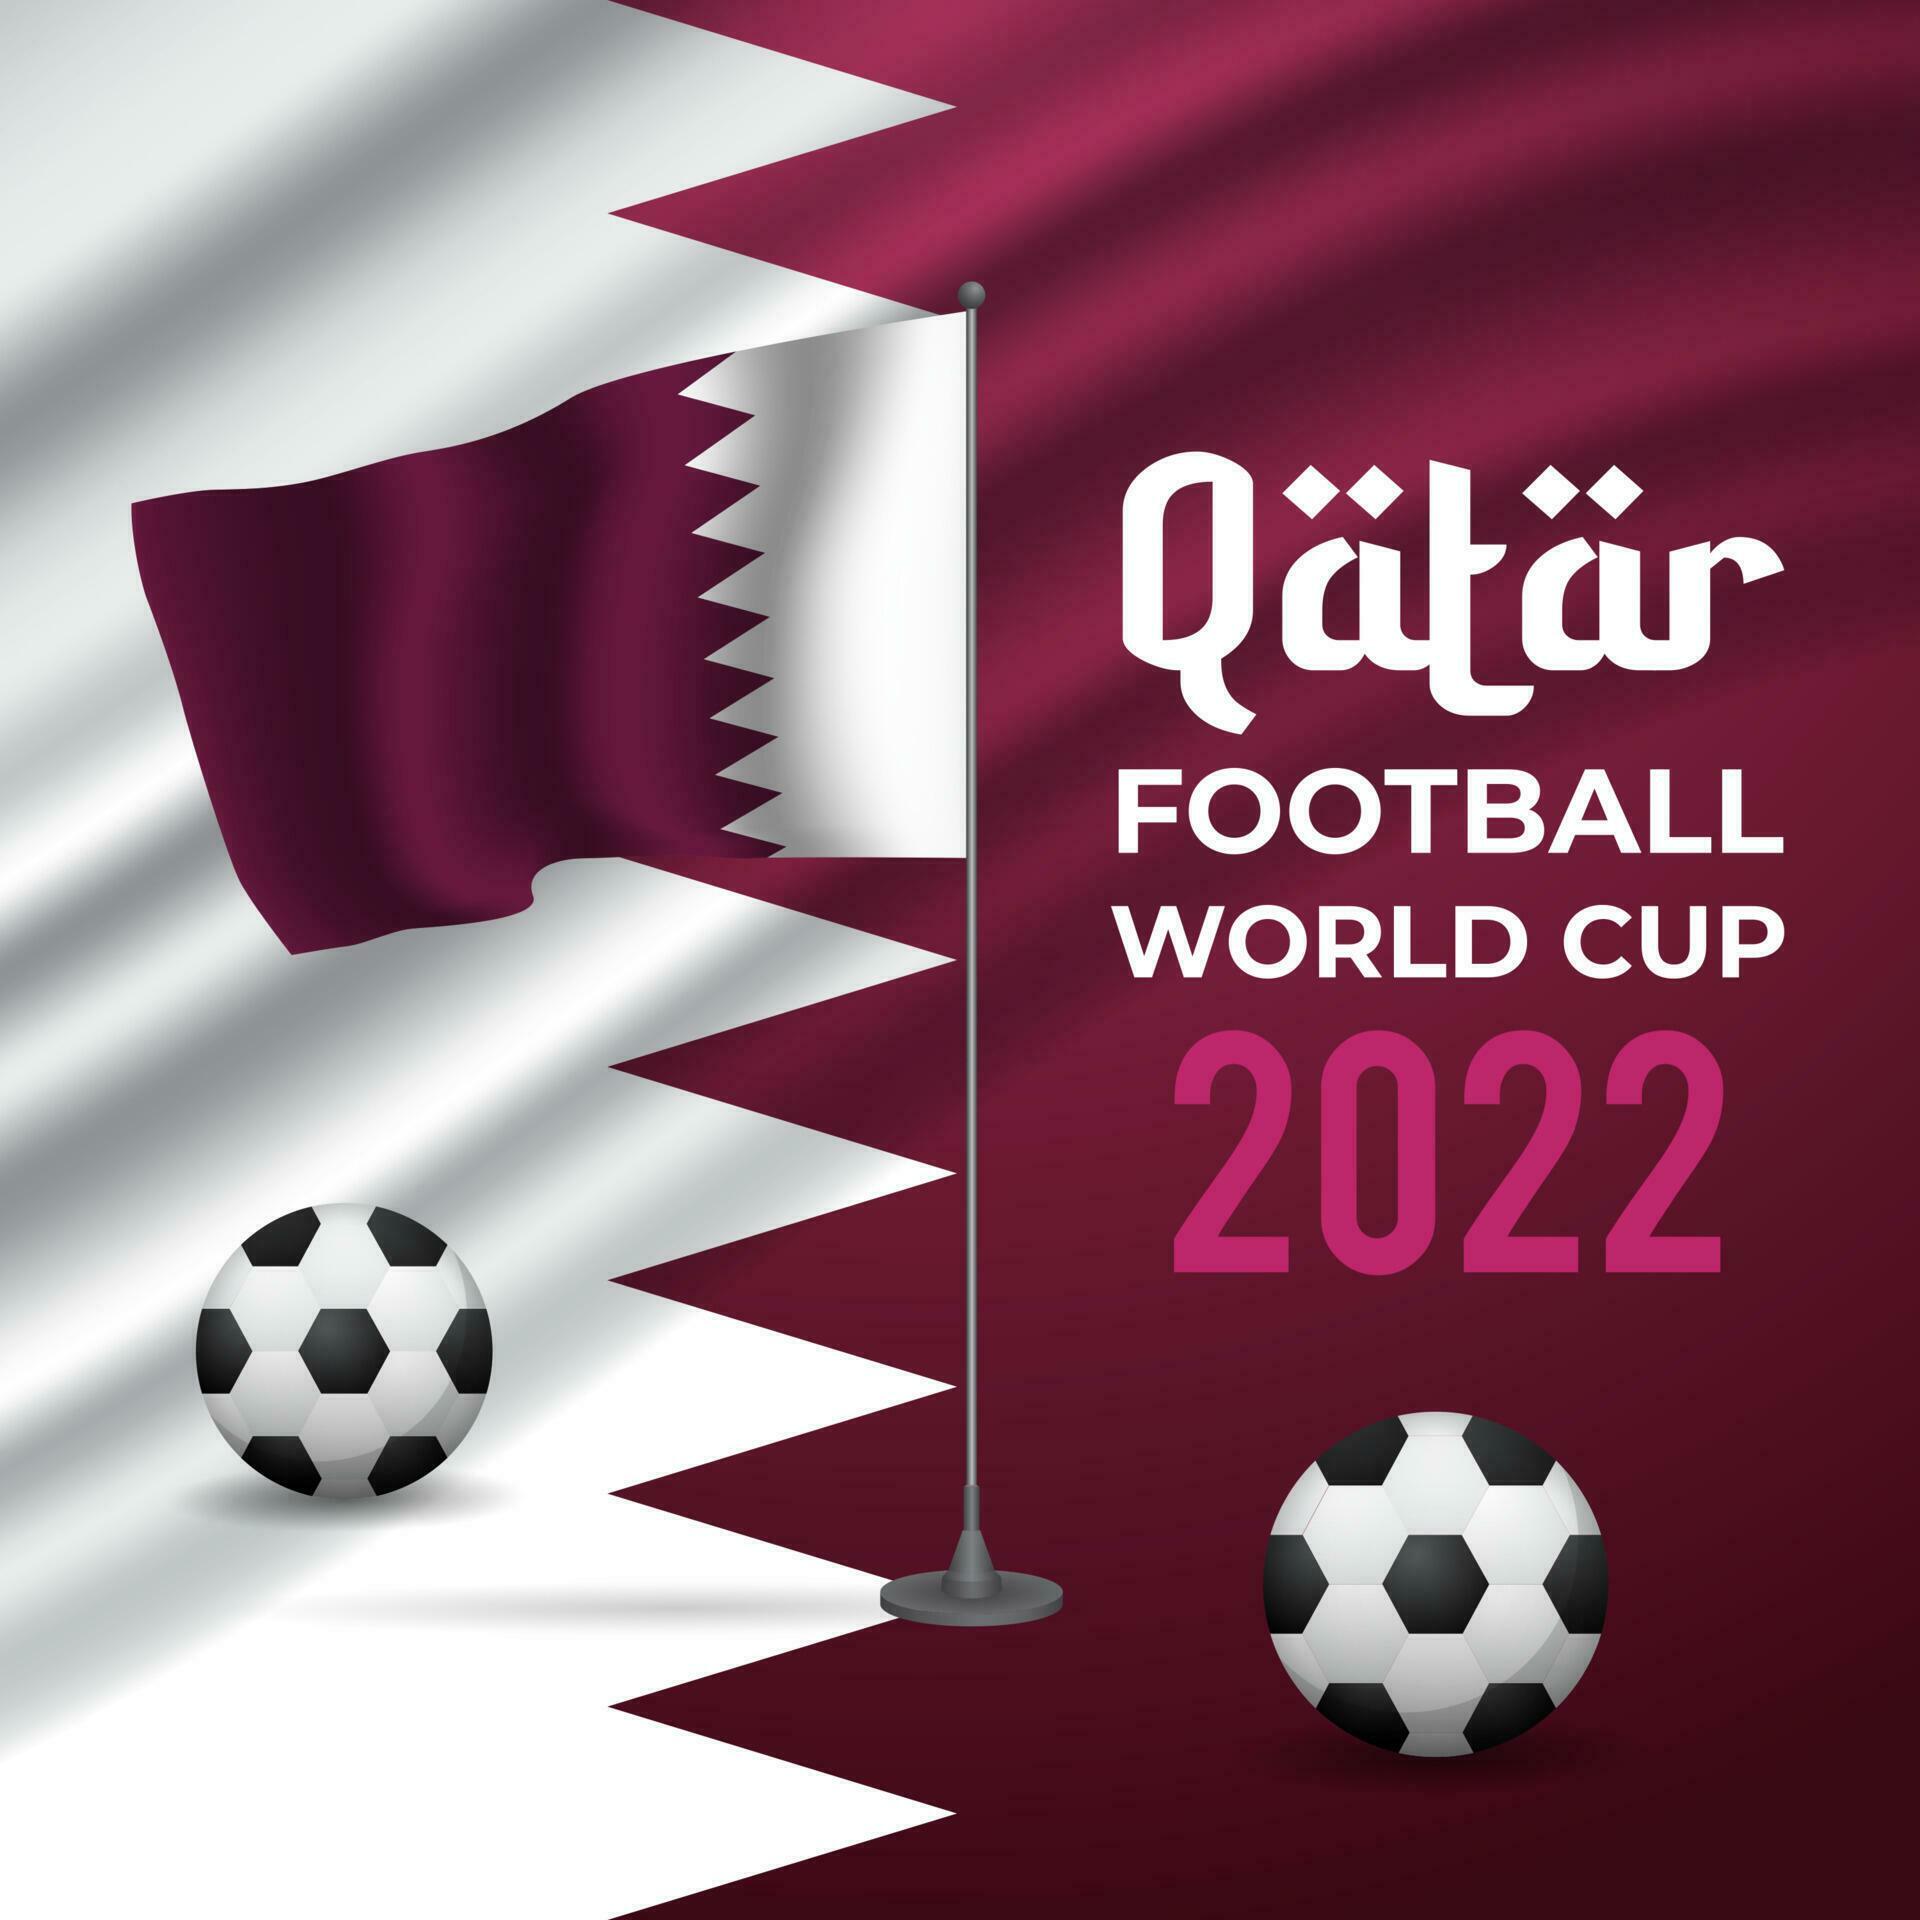 world-football-championship-banner-template-with-qatar-national-flag